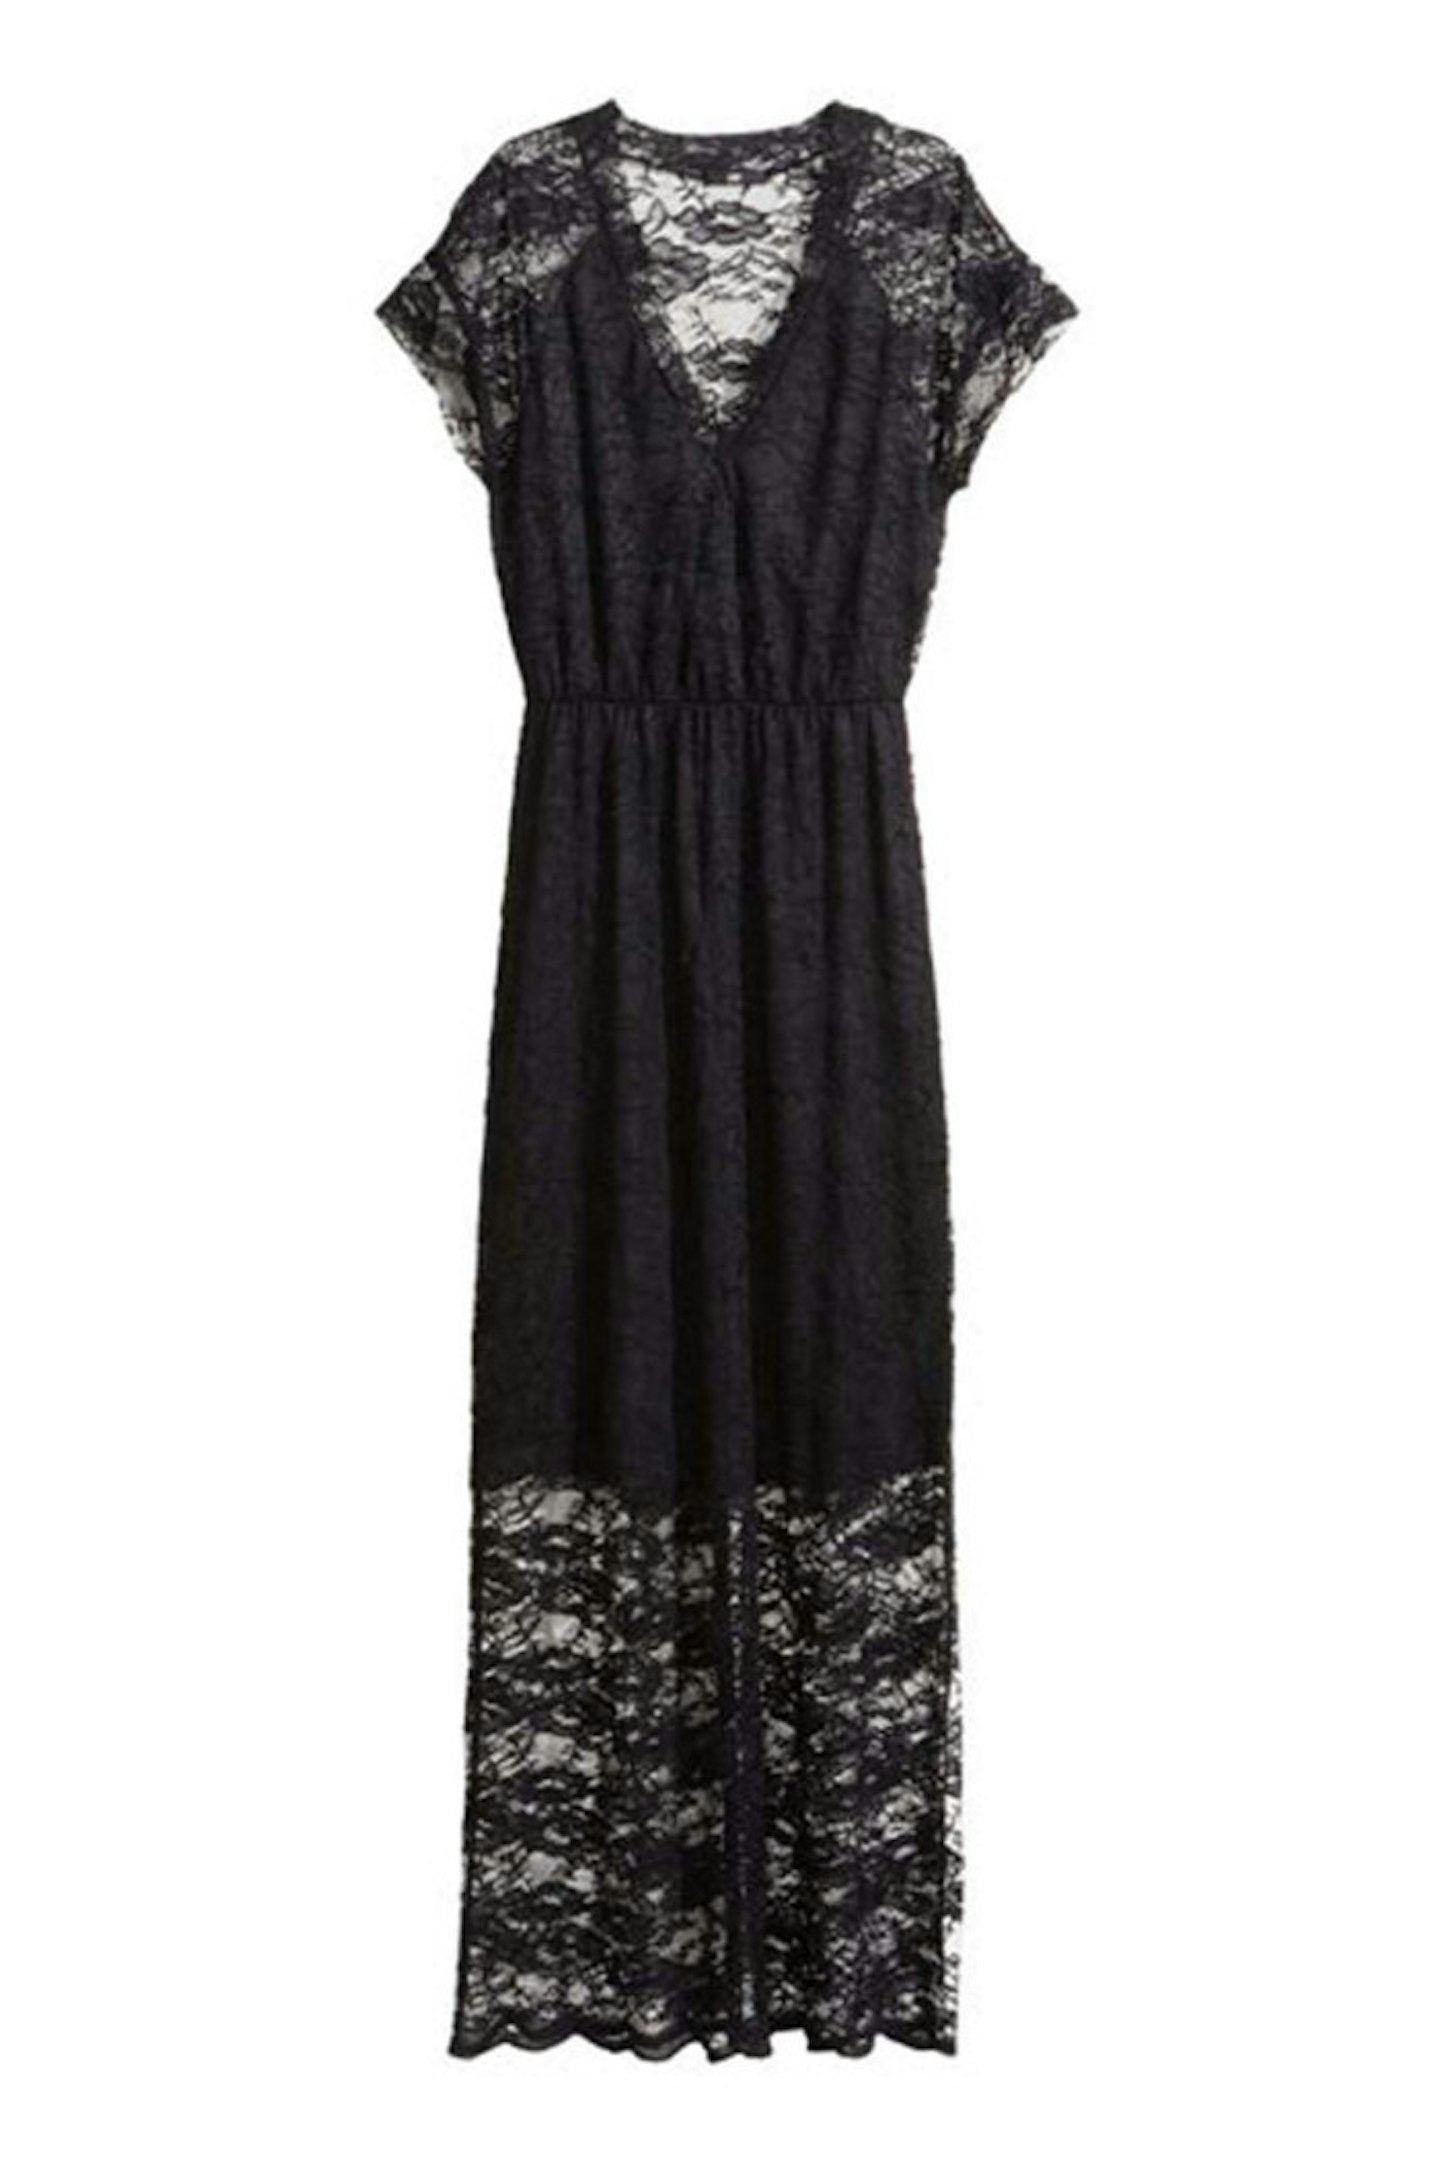 Long lace dress, £29.99, H&M